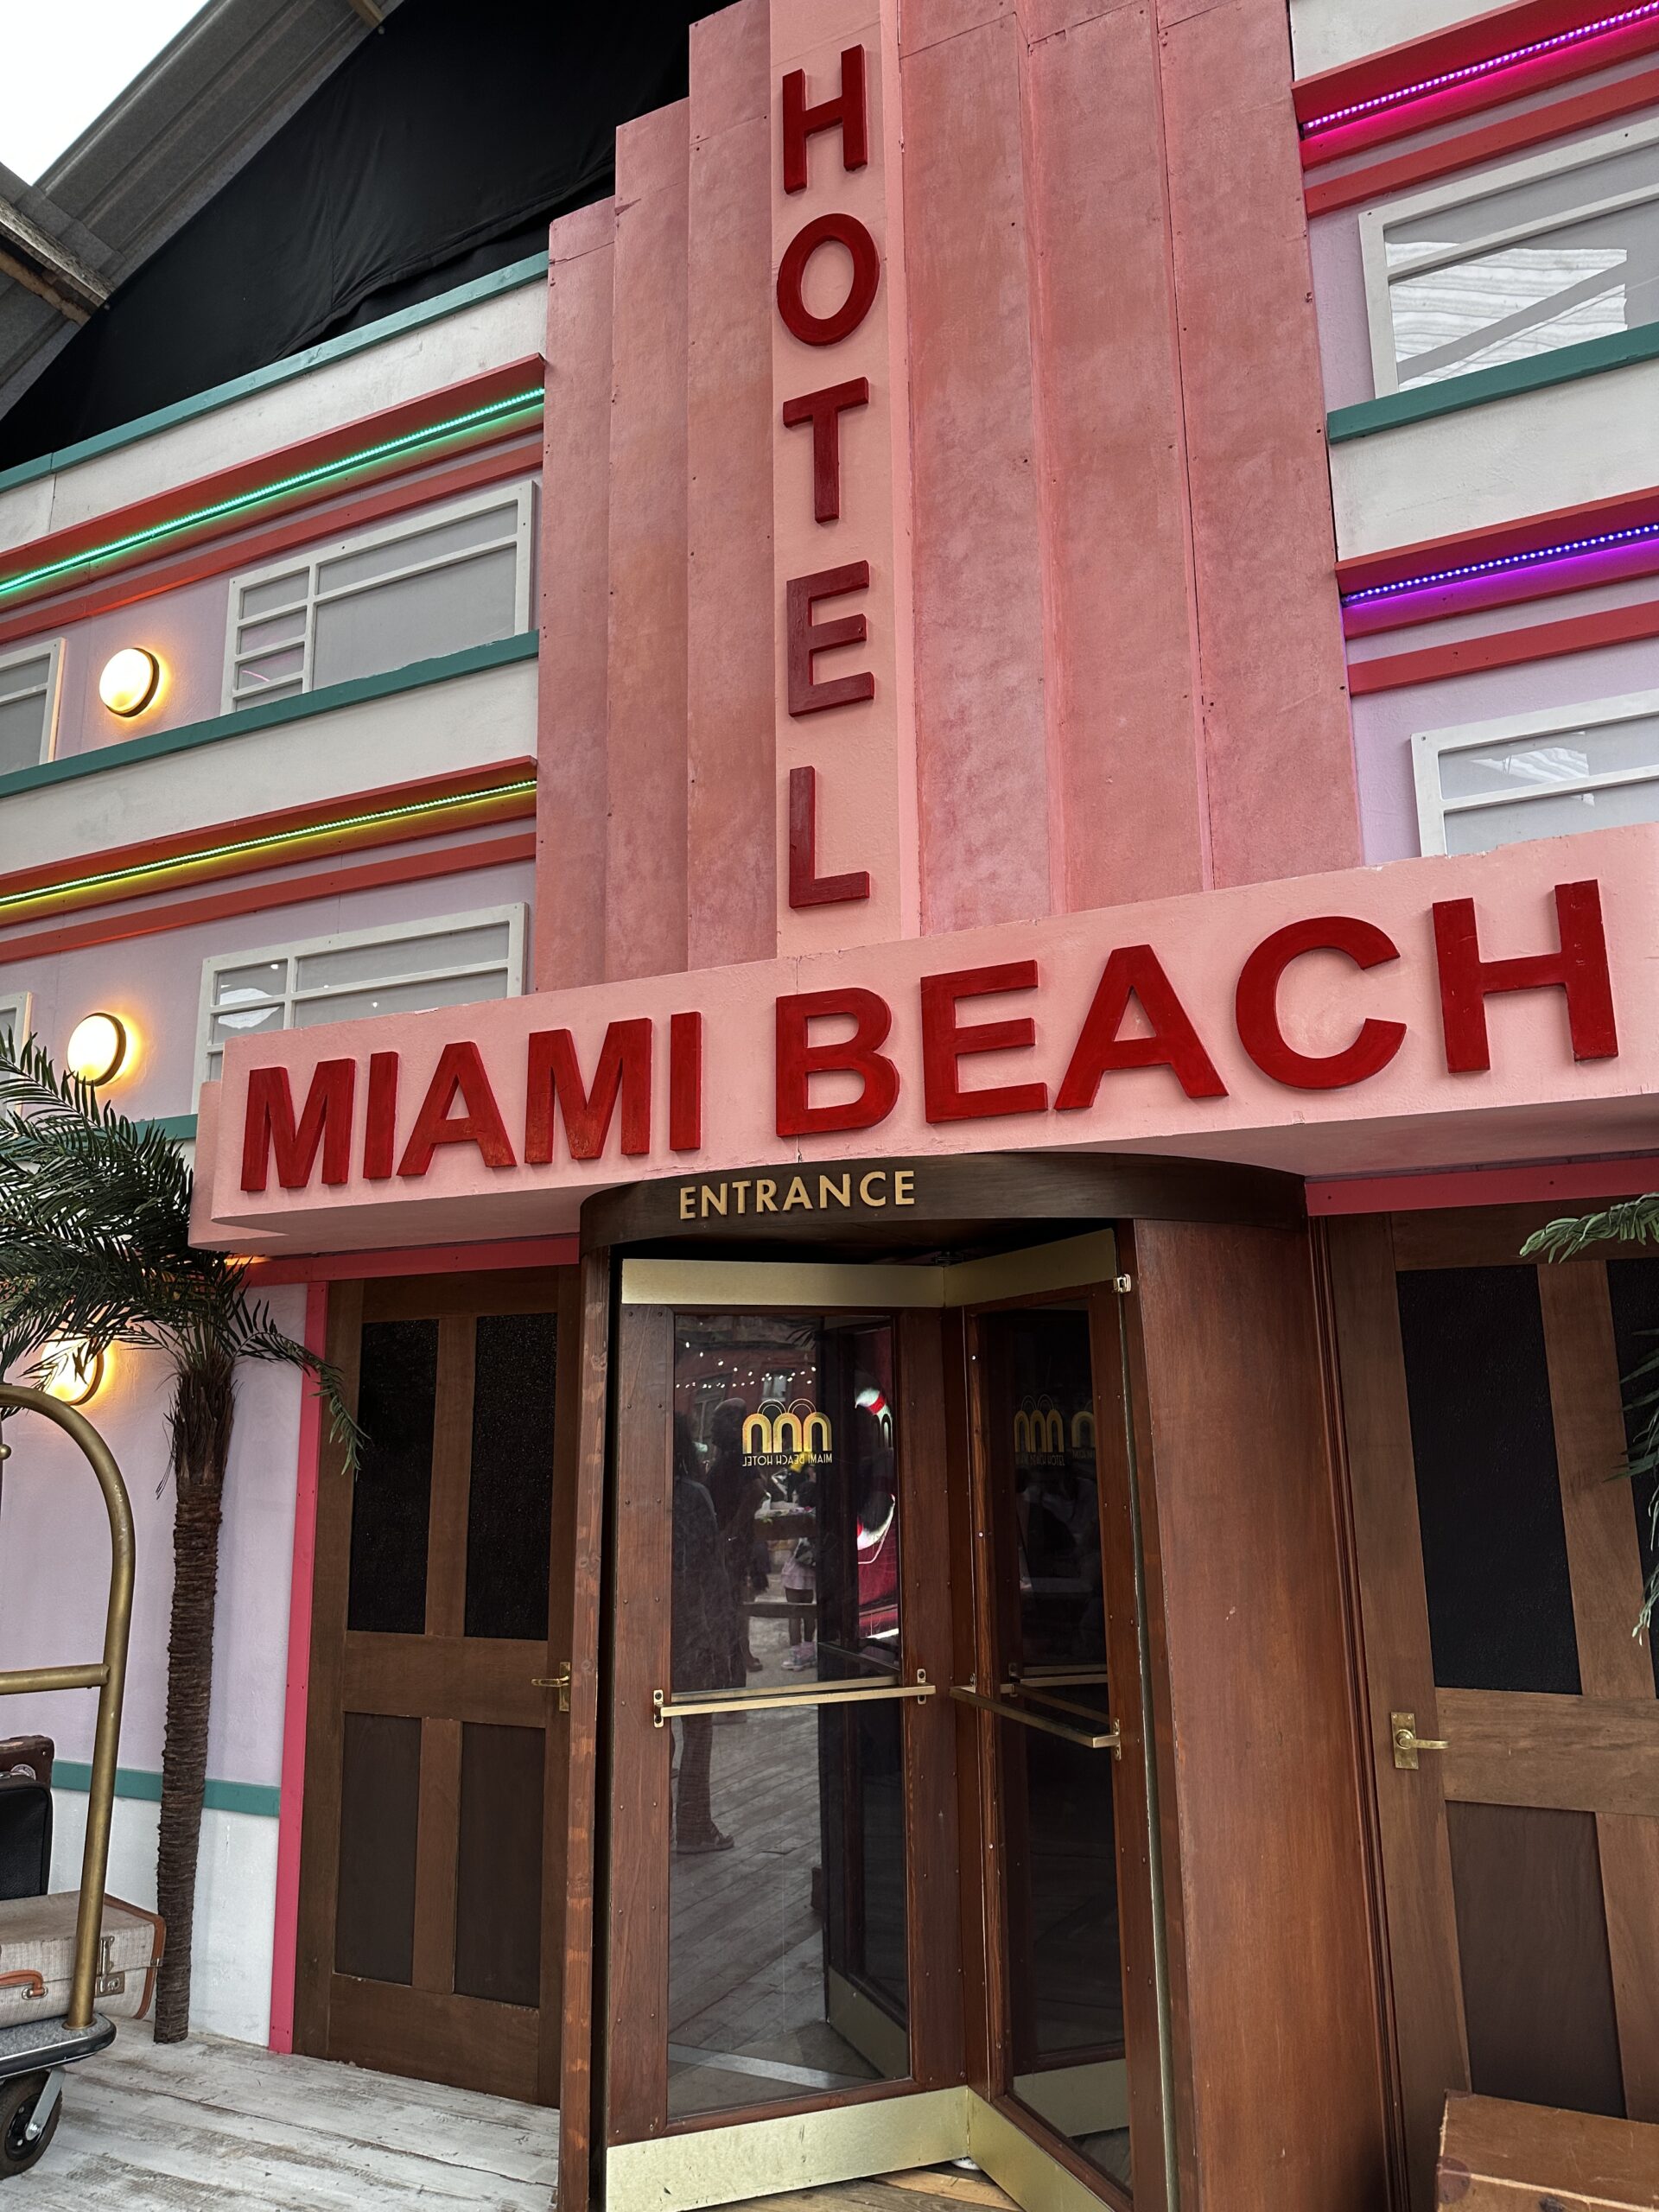 Backyard CInema has built a Miami Beach-inspired hotel in Manchester